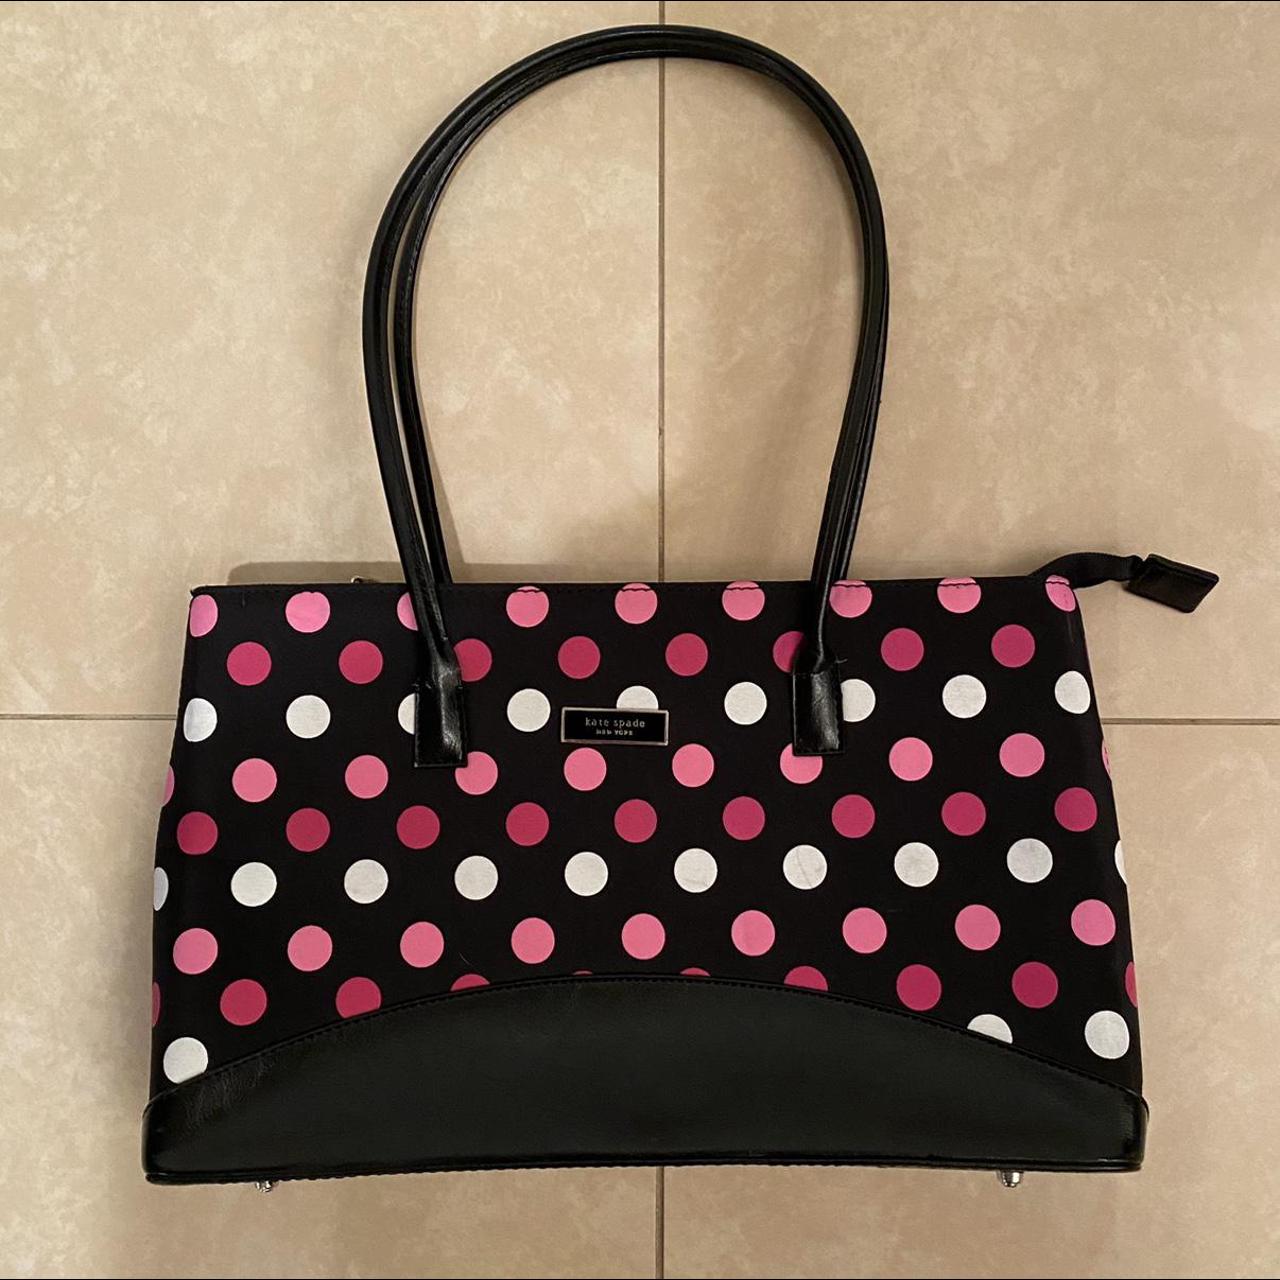 Kate Spade New York Women's Black and Pink Bag | Depop